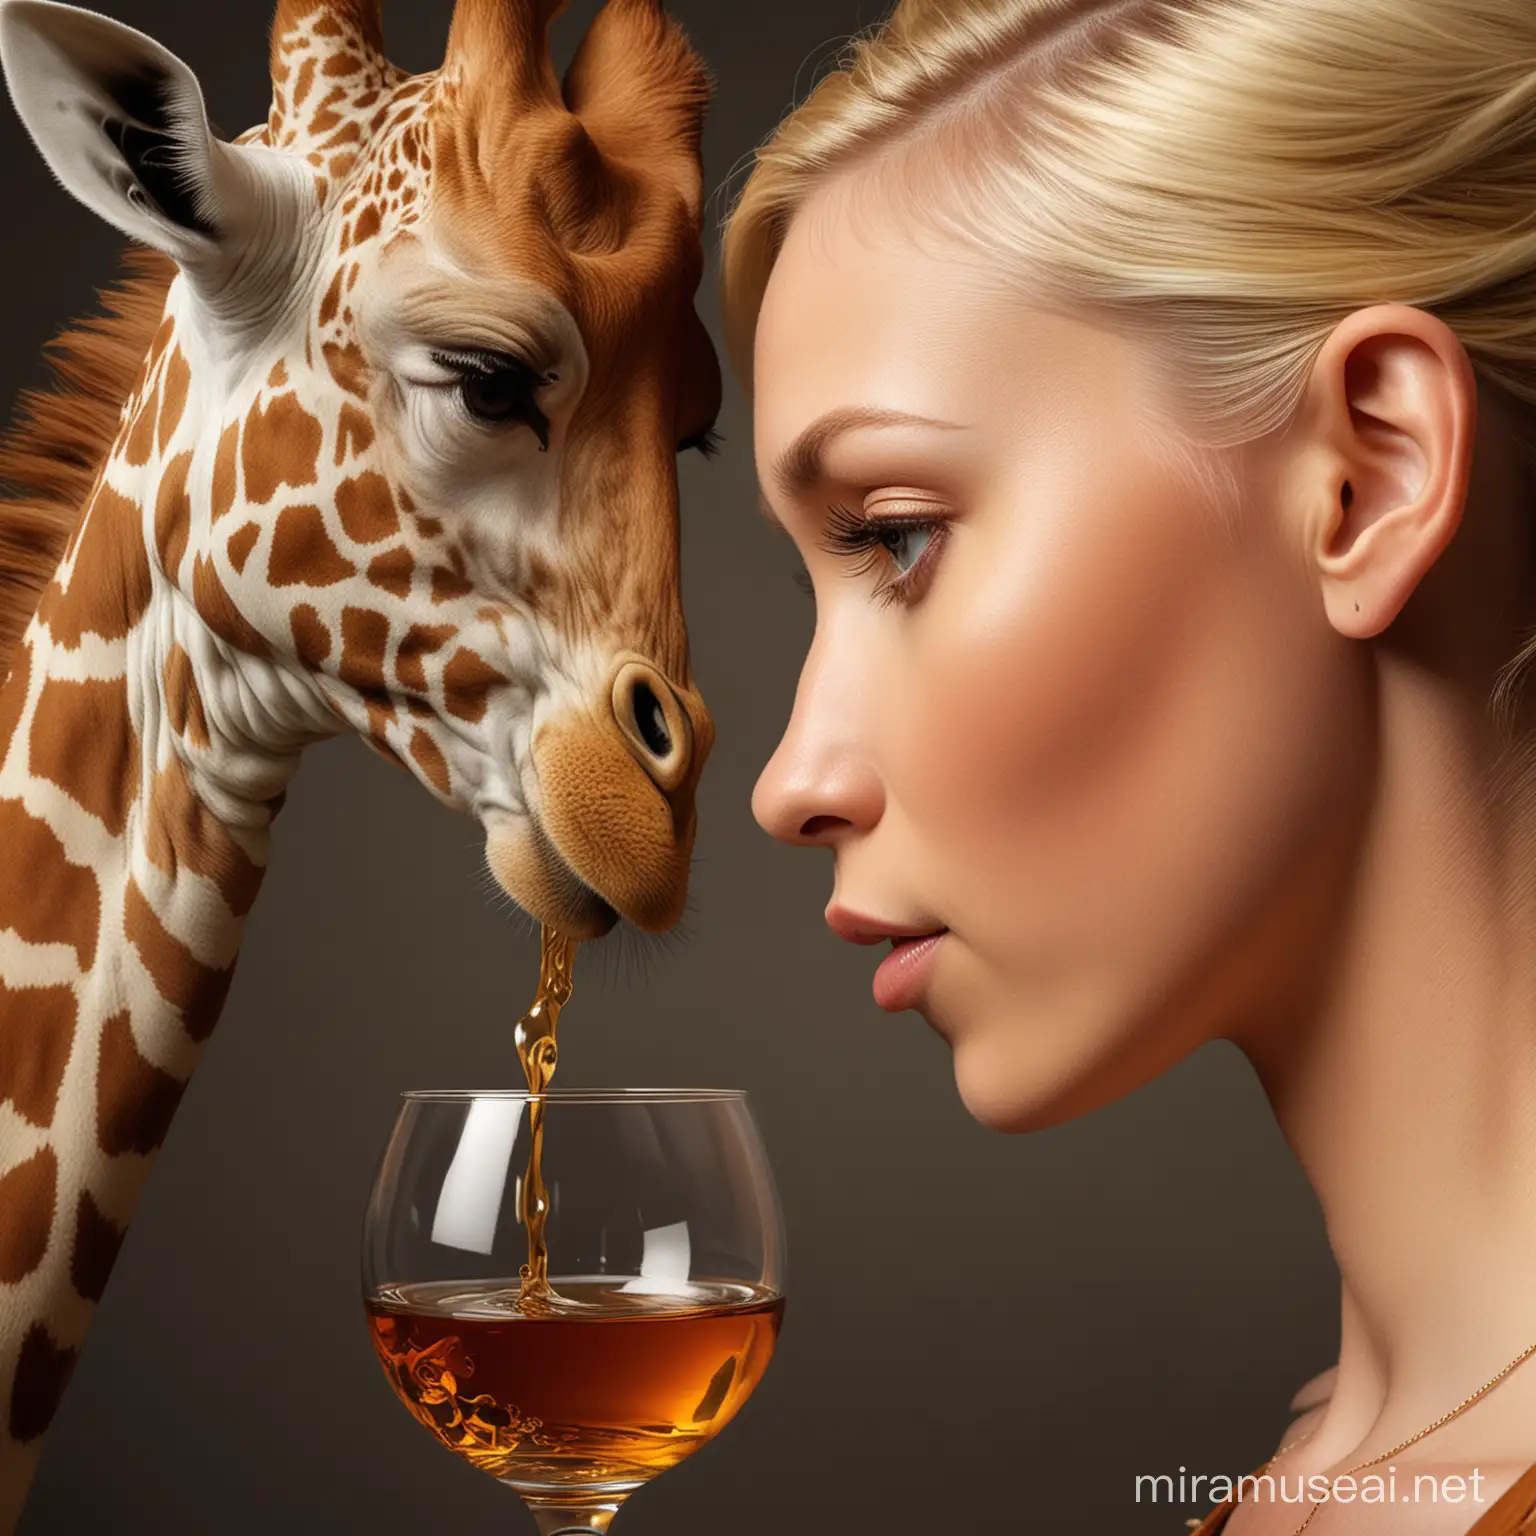 Blonde Woman Enjoying Single Malt Scotch Whisky in Realistic Nosing Glass